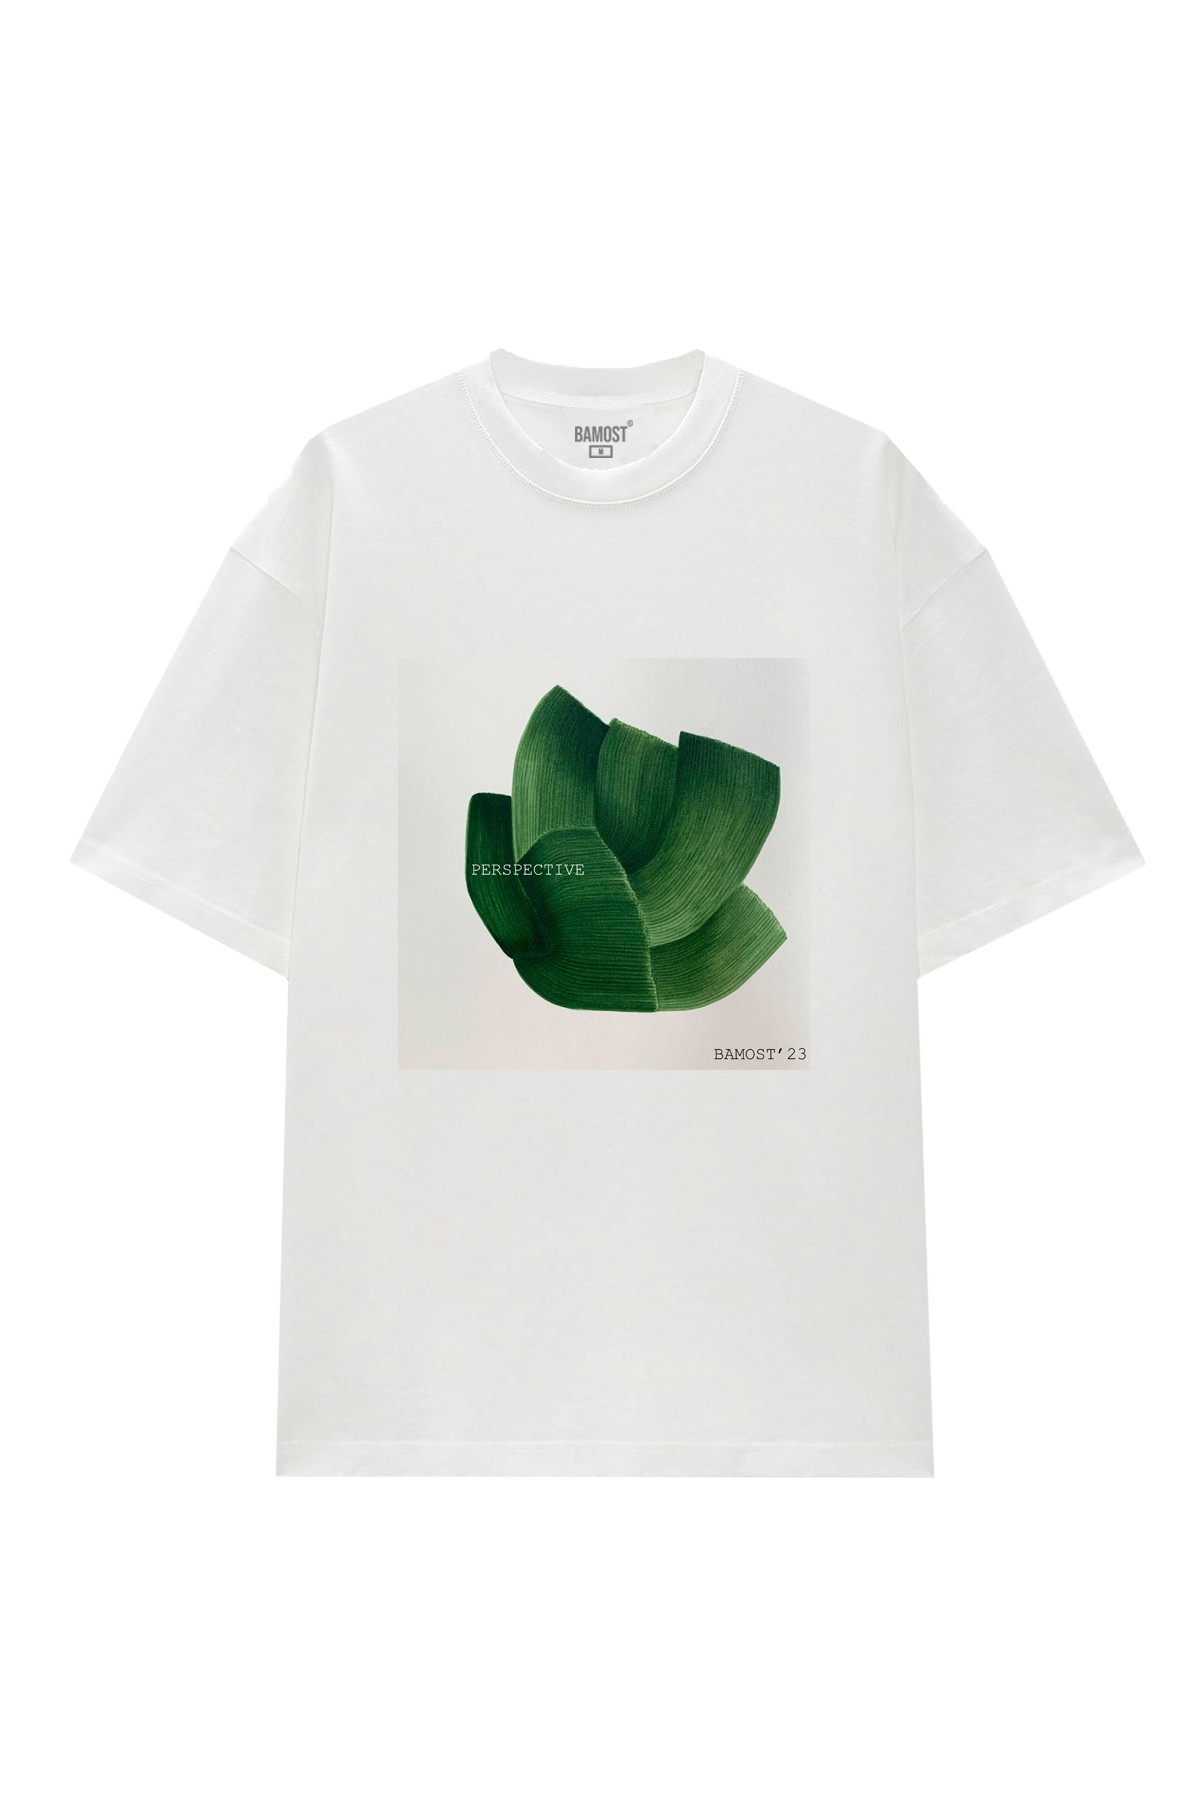 Perspective'4 - Unisex Oversize T-Shirt - WHITE